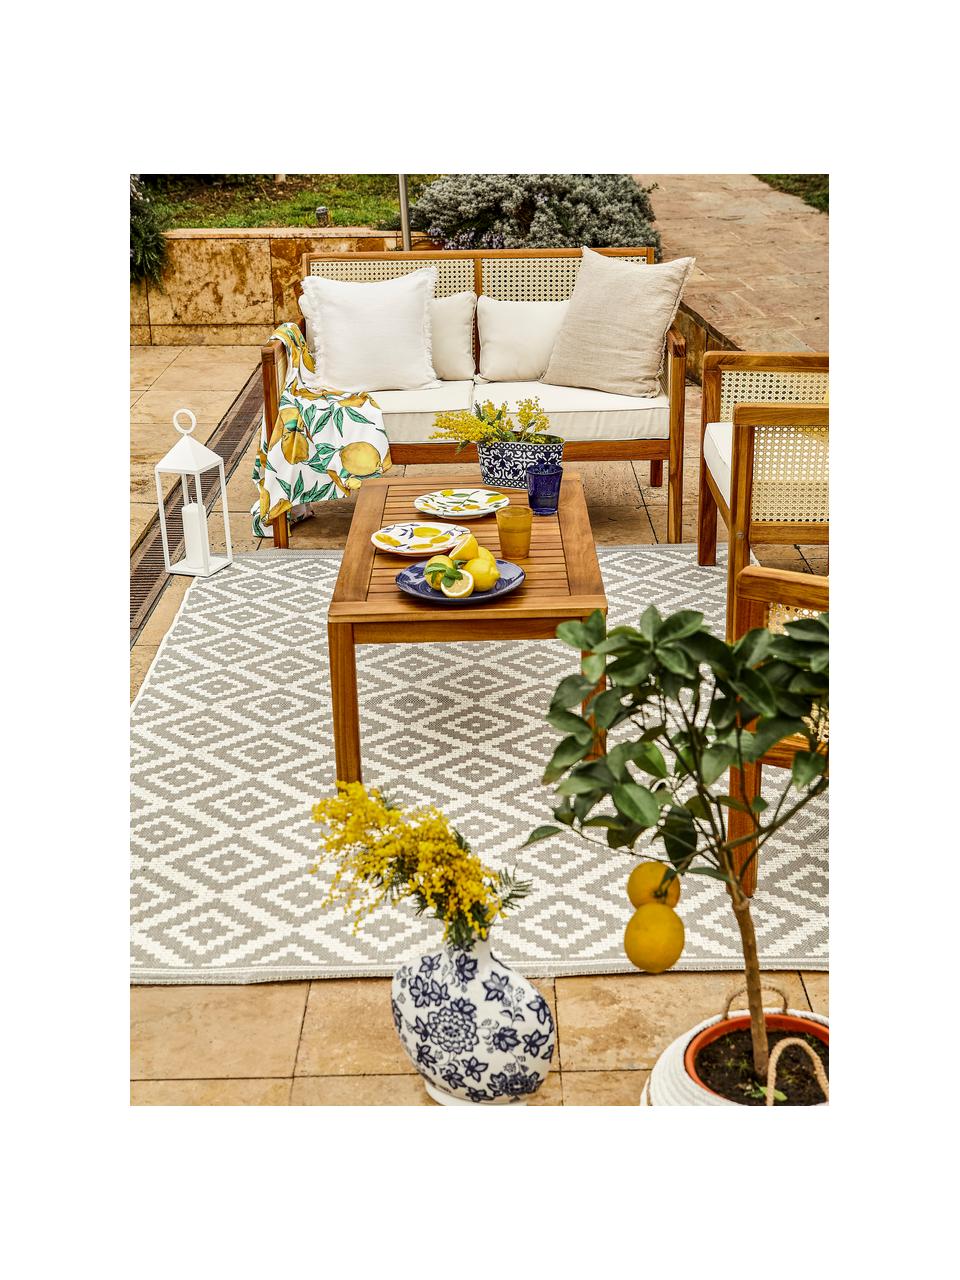 Interiérový/exteriérový koberec Miami, 70 % polypropylen, 30 % polyester, Šedá, bílá, Š 80 cm, D 150 cm (velikost XS)